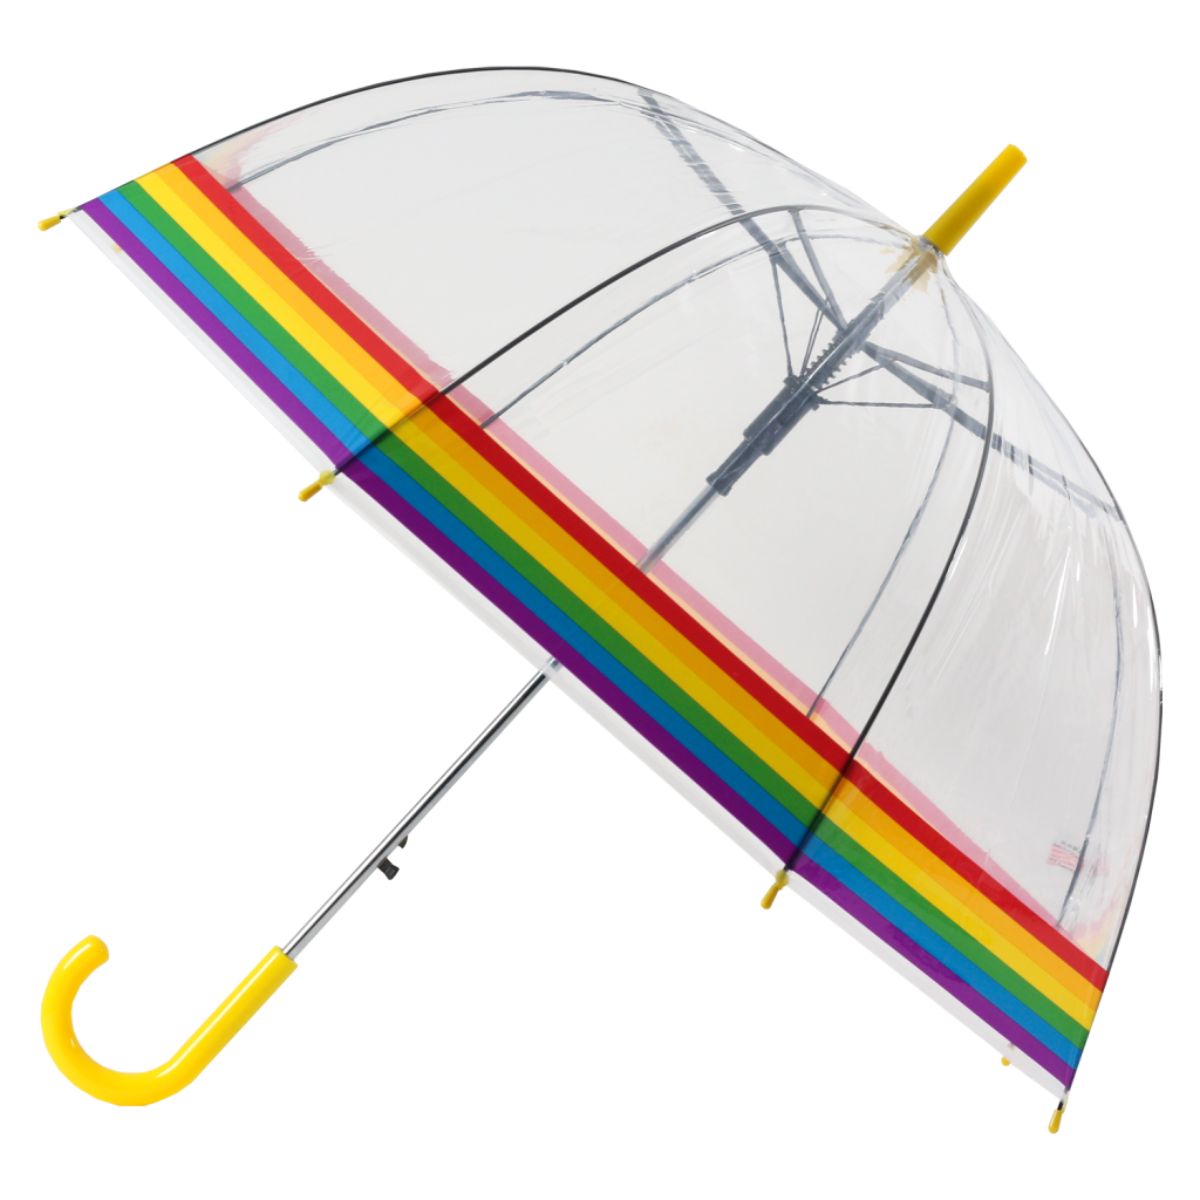 Adult clear umbrella with rainbow trim